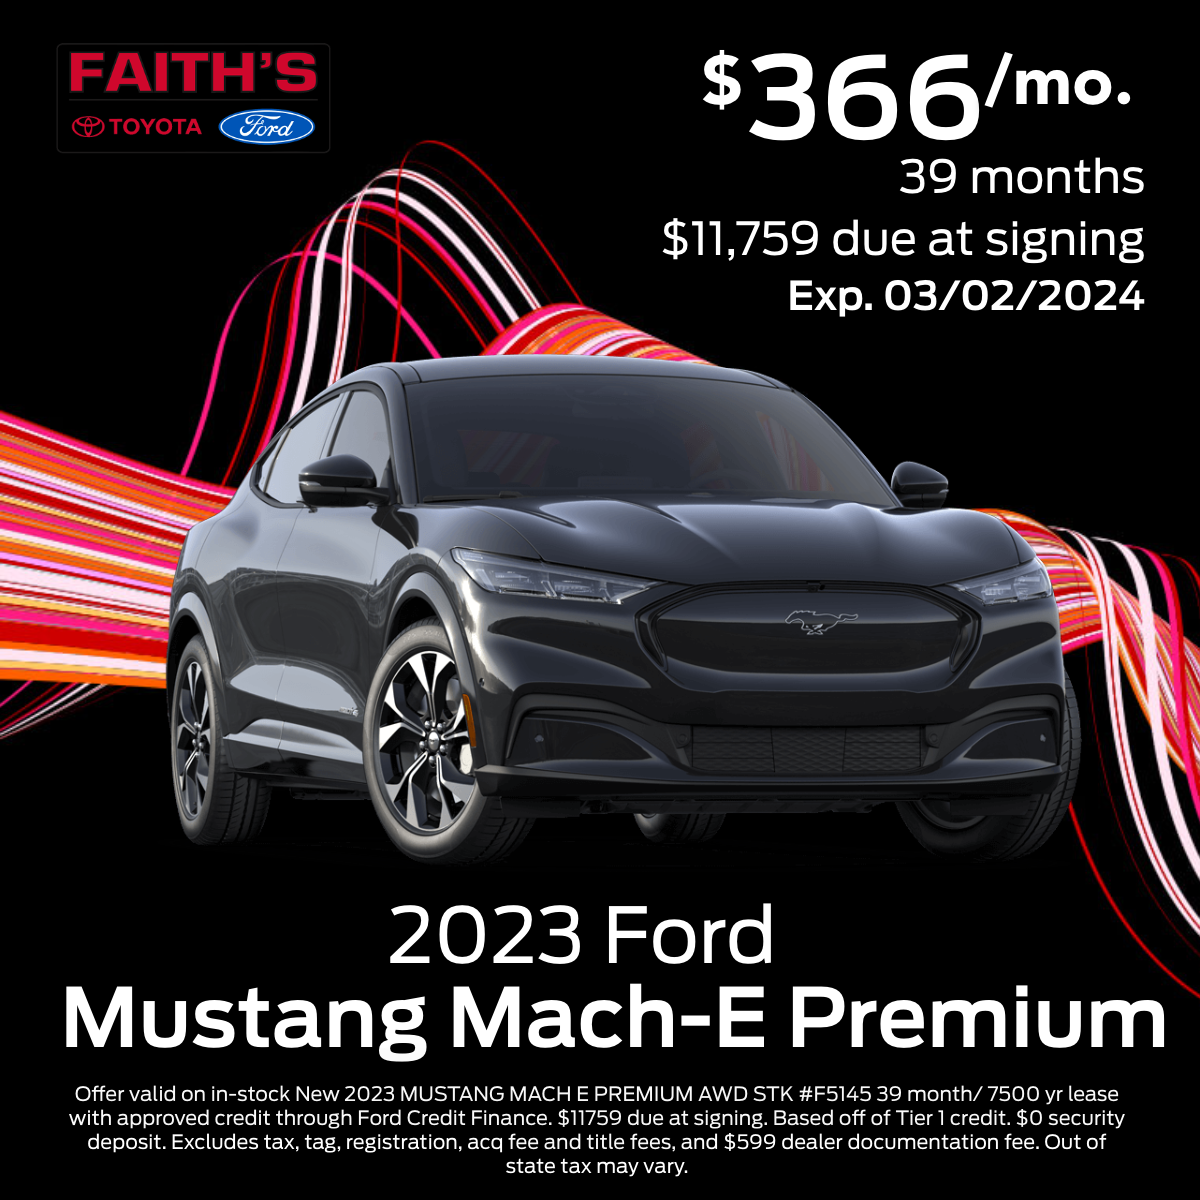 2023 Ford Mustang Mach-E Premium Lease Offer | Faiths Auto Group